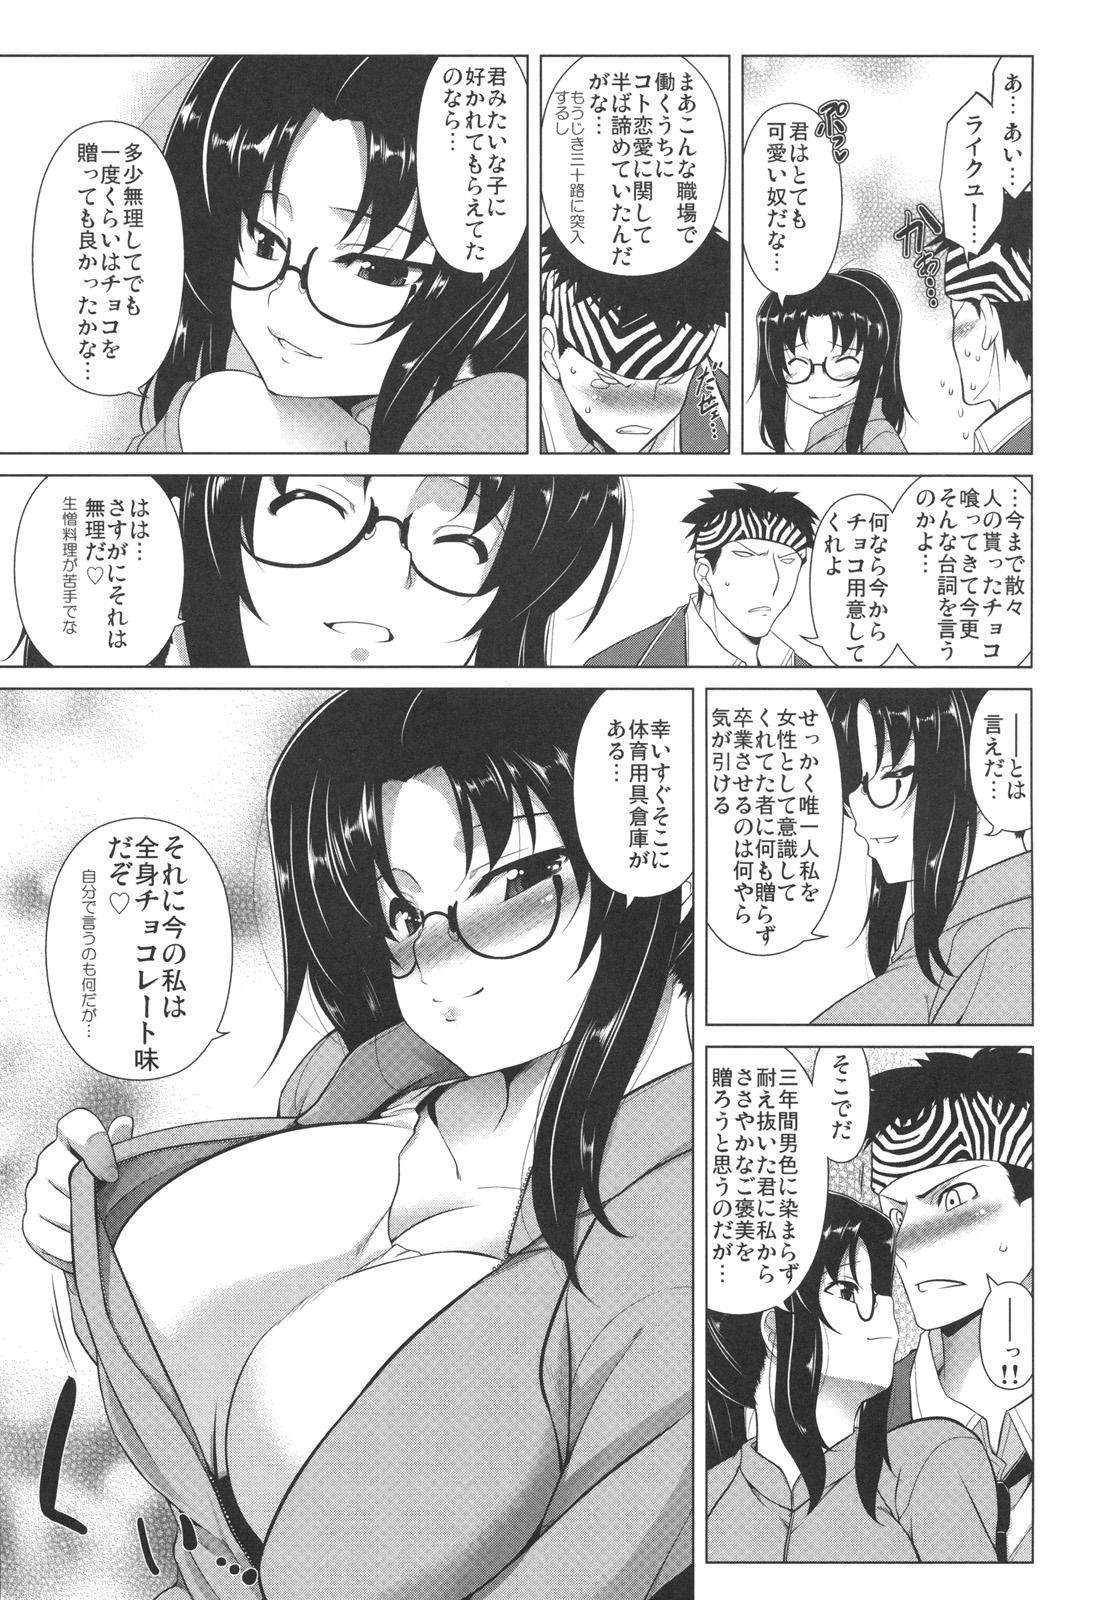 Shinzui Valentine Special Vol. 2 66